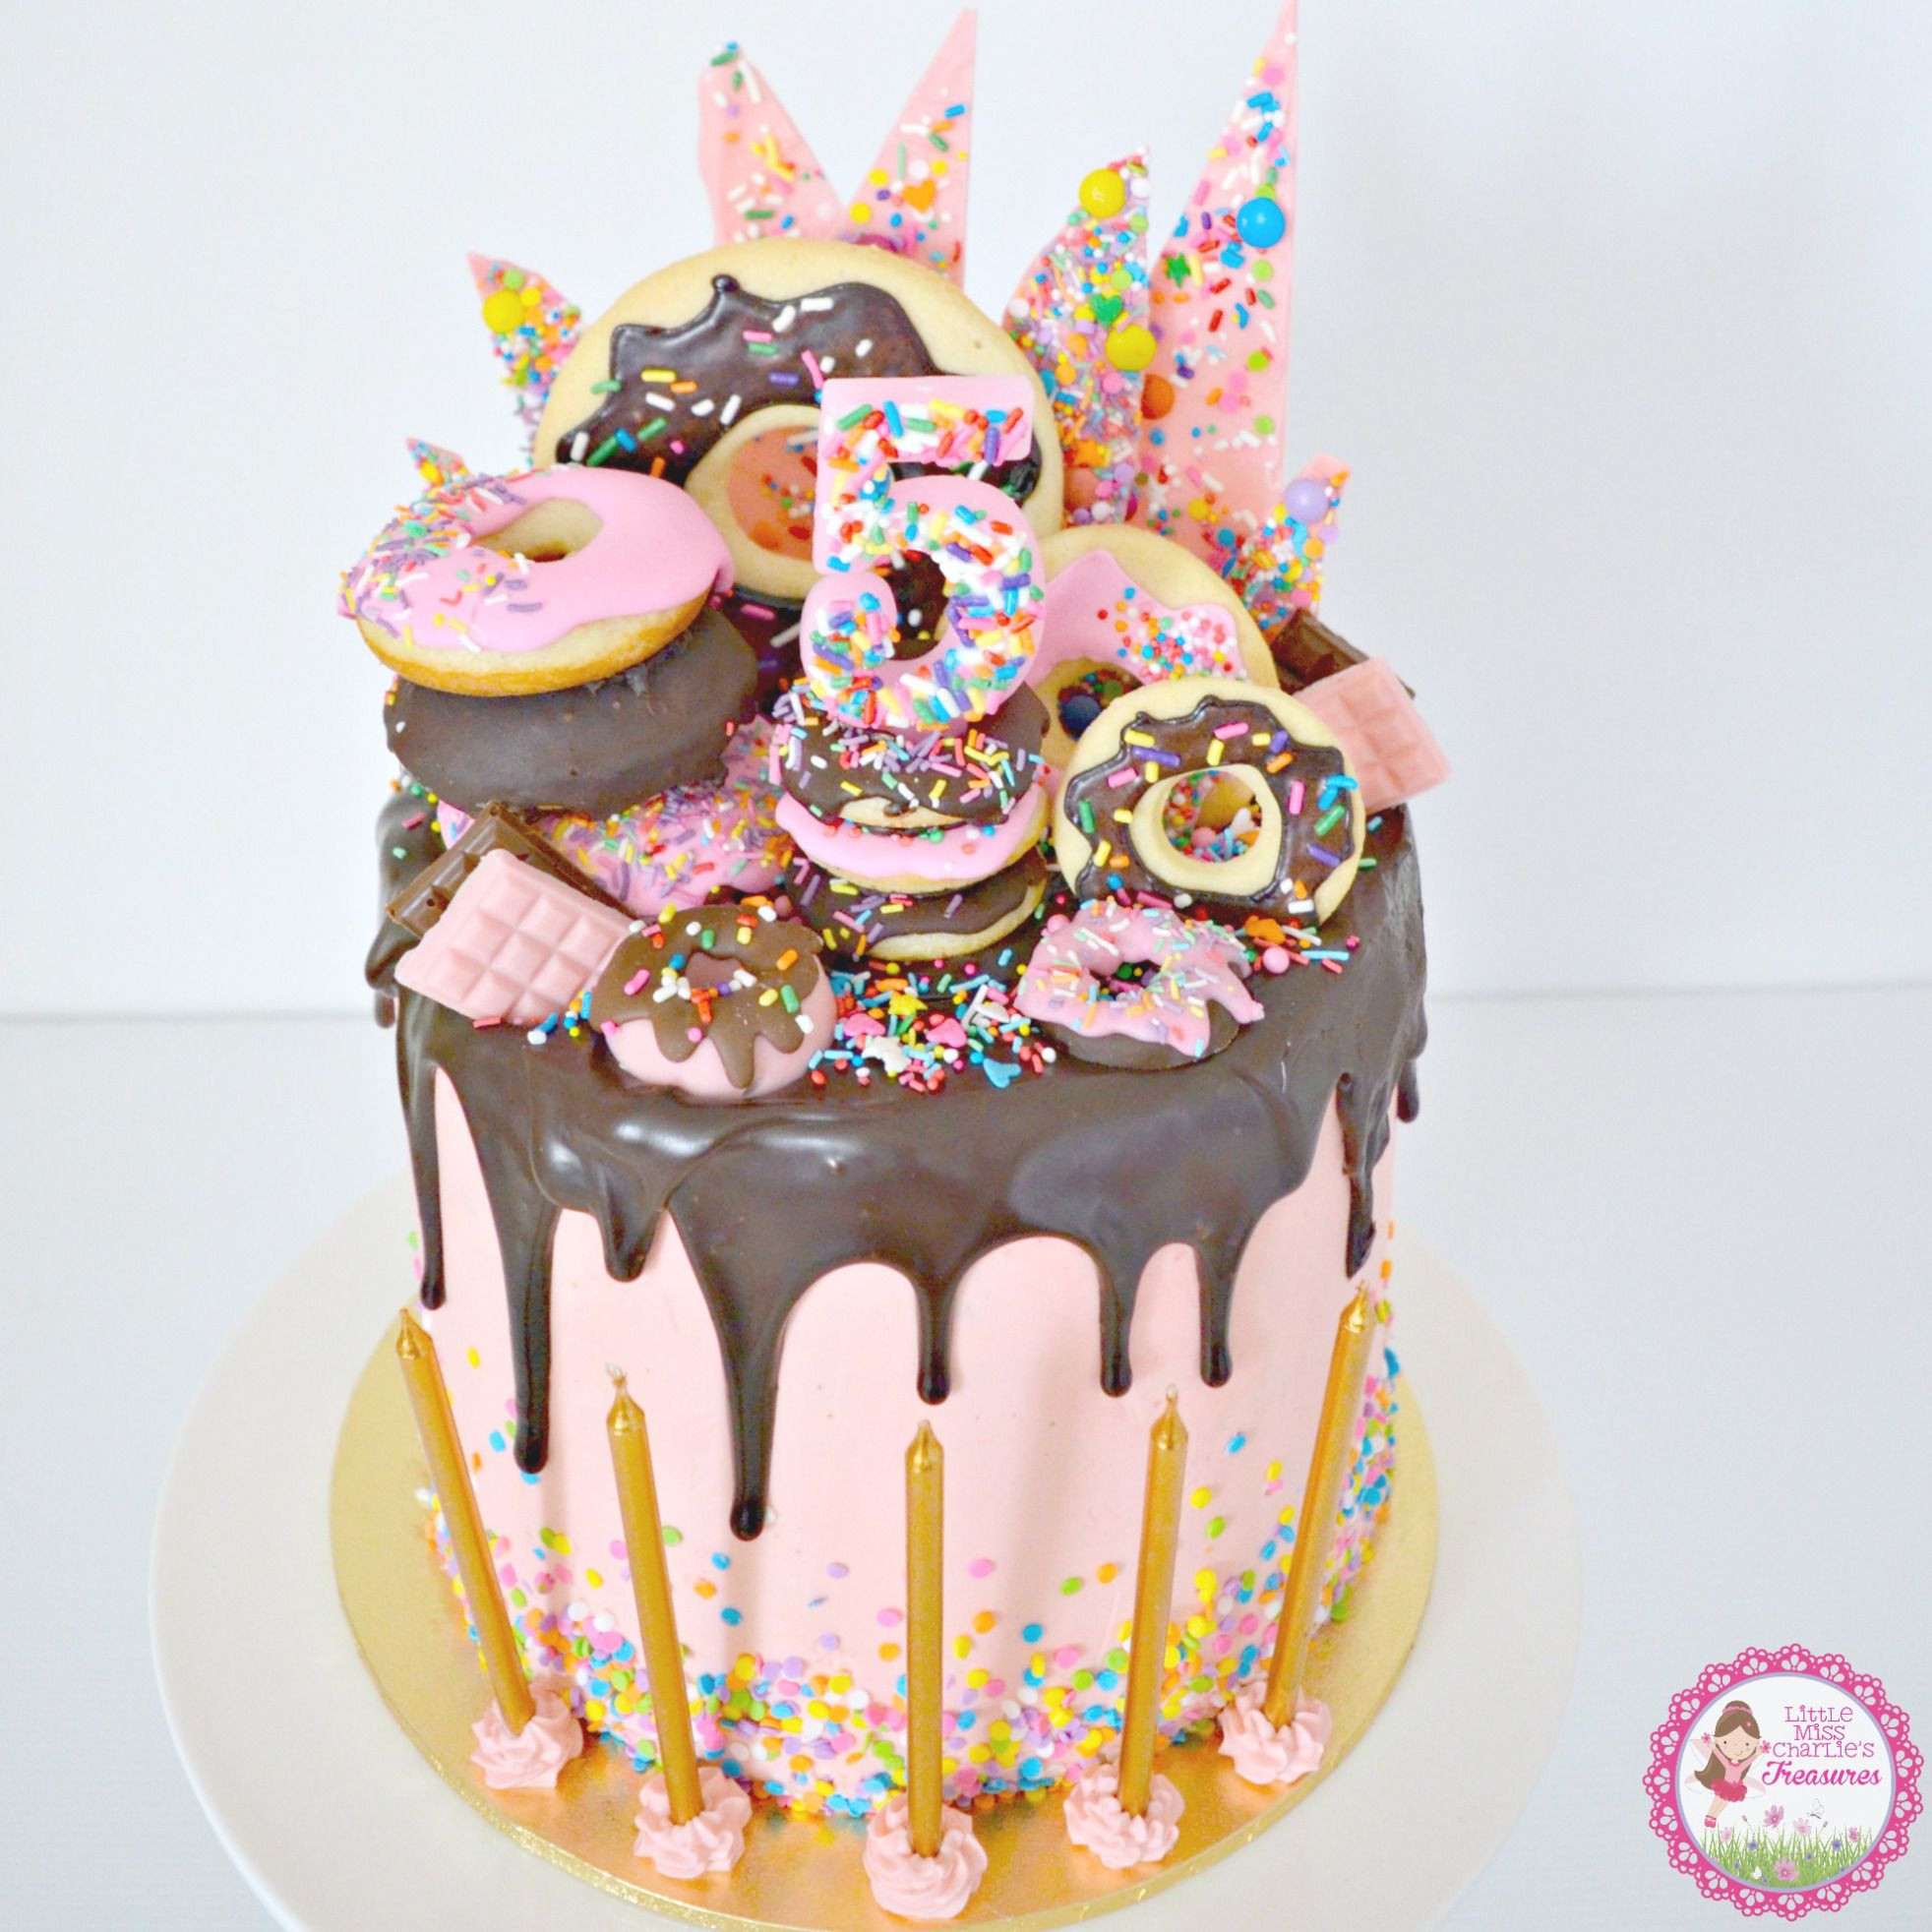 Best ideas about Donut Birthday Cake
. Save or Pin littlemisscharlieblog Cake Deco Now.